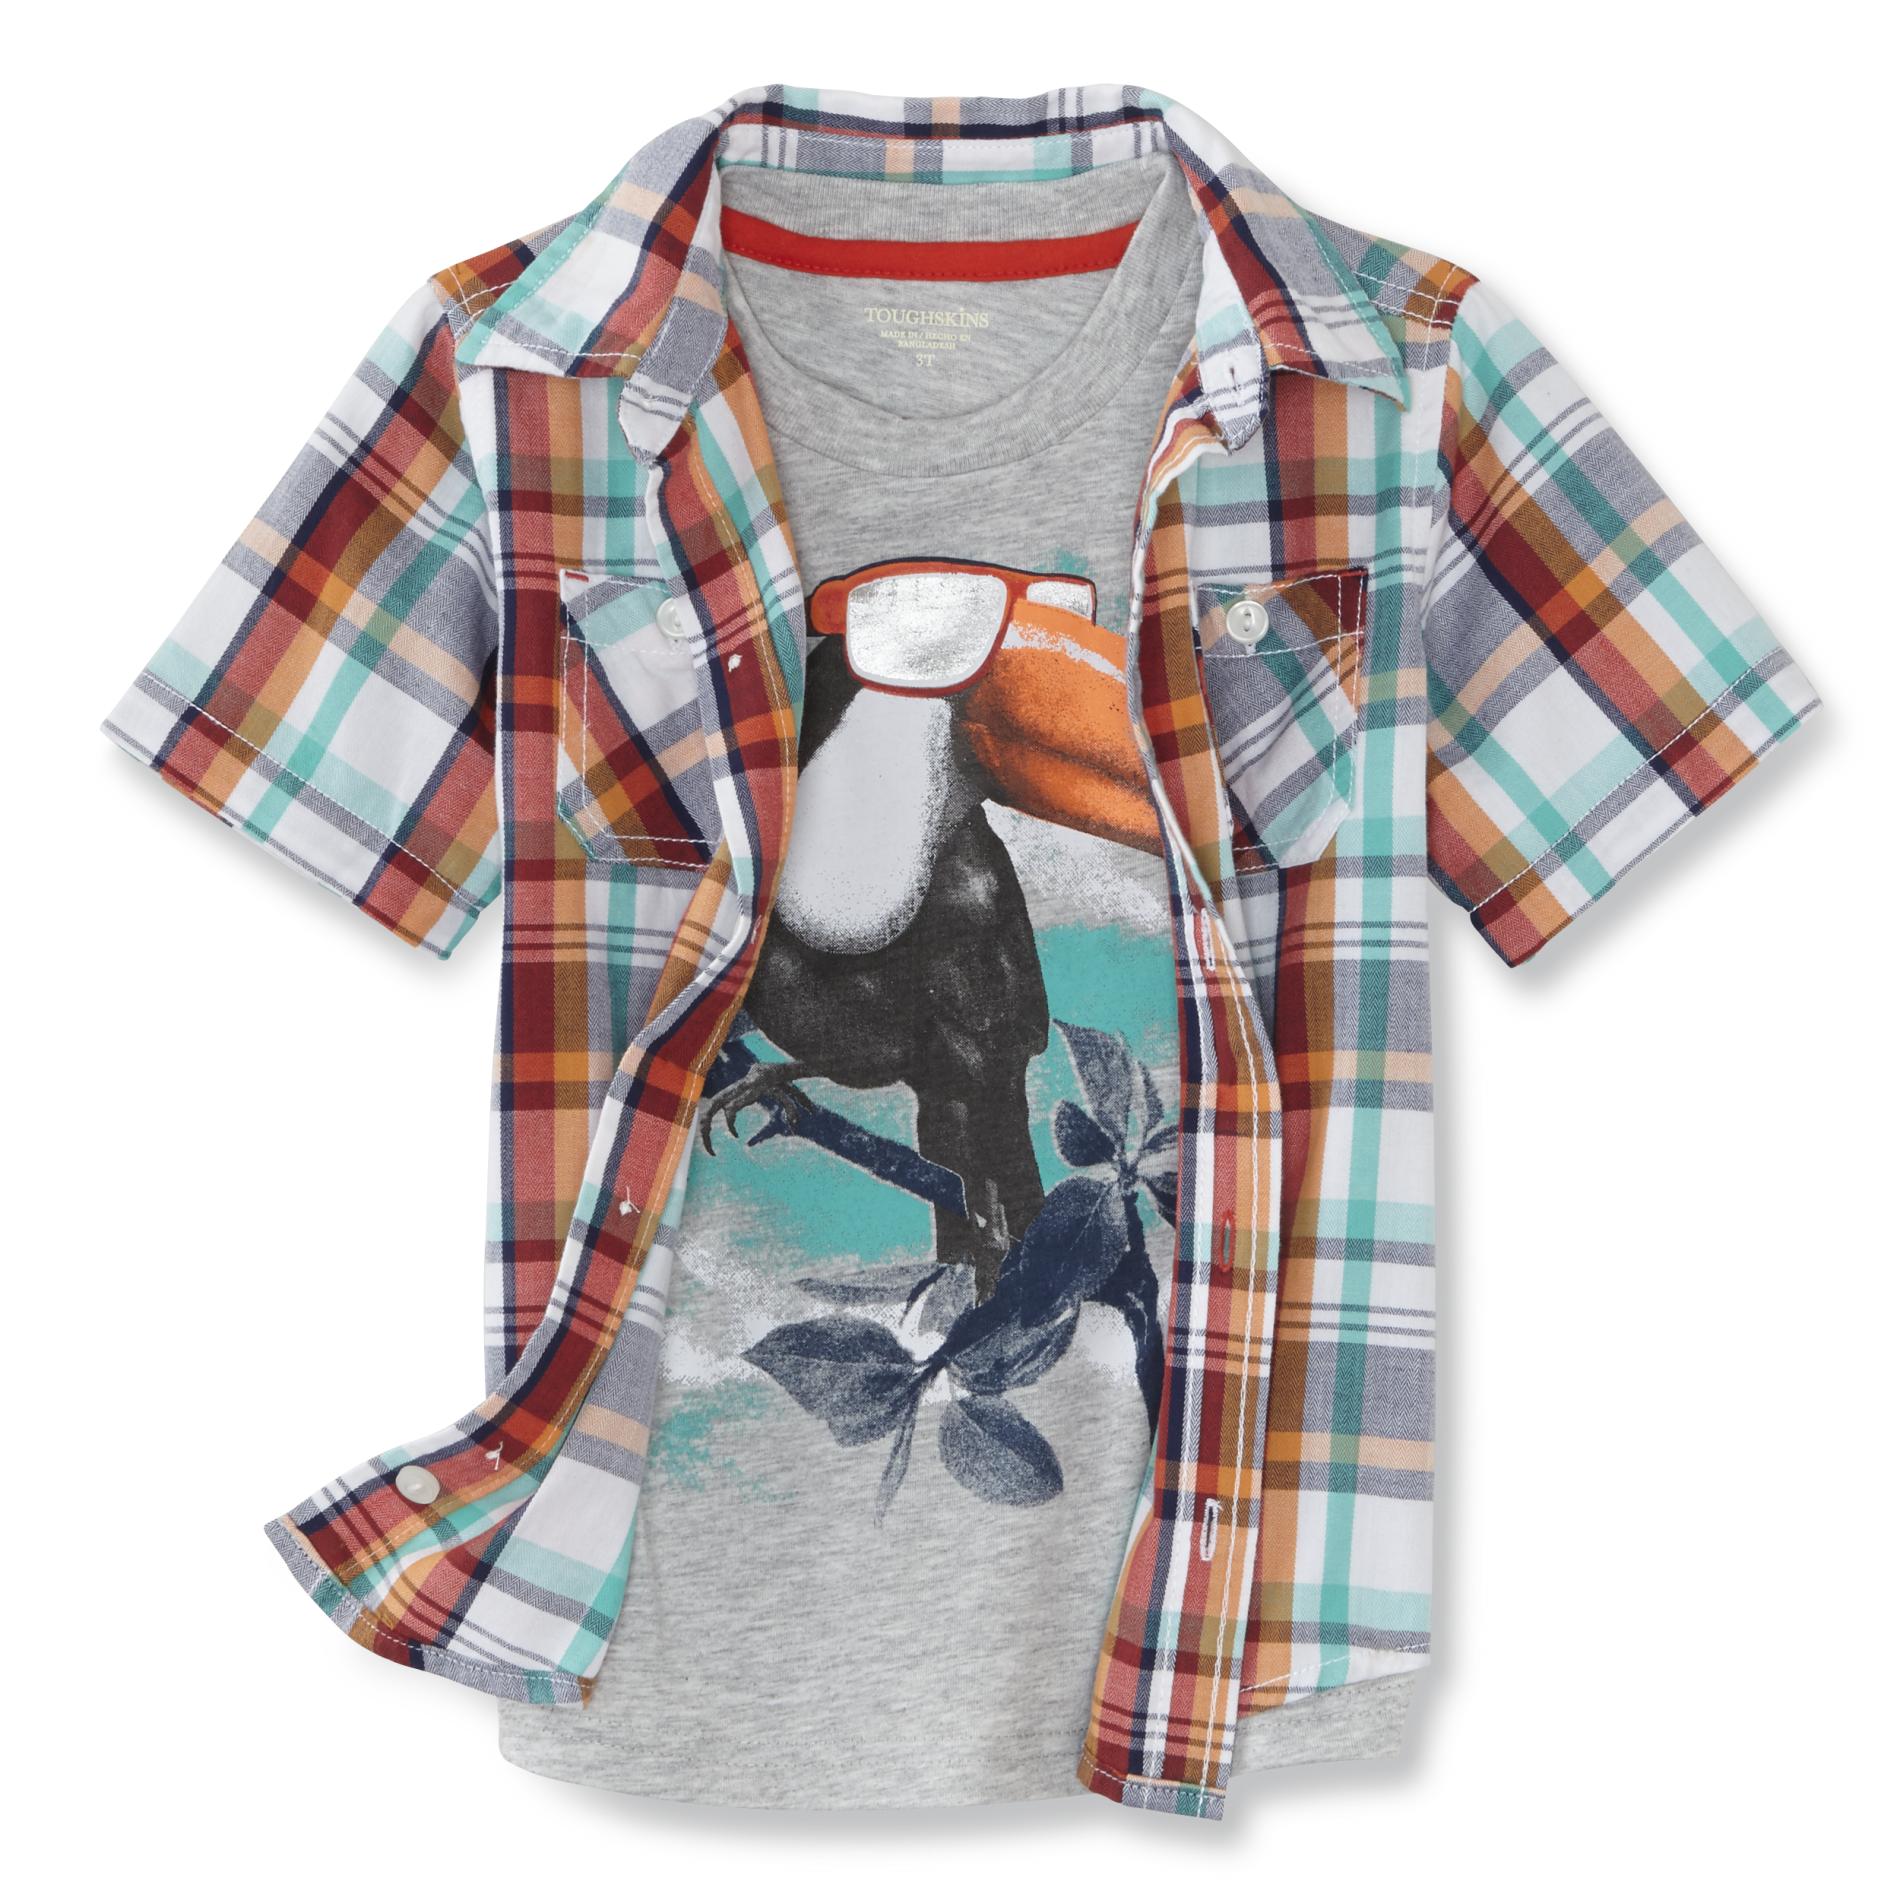 Toughskins Infant & Toddler Boy's Graphic T-Shirt & Button-Front Shirt - Plaid